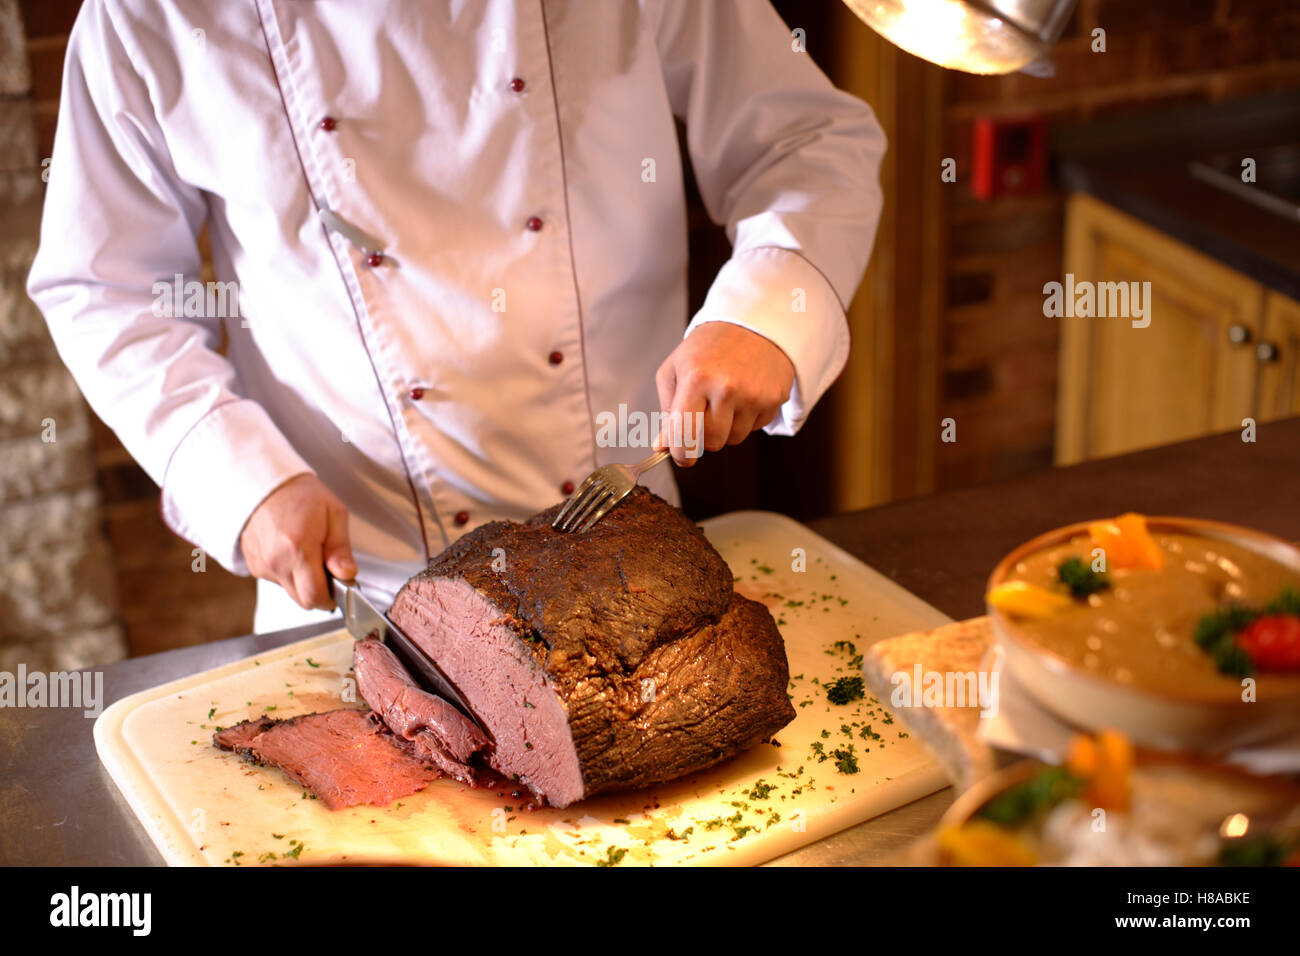 https://c8.alamy.com/comp/H8ABKE/chef-carving-roast-beef-H8ABKE.jpg